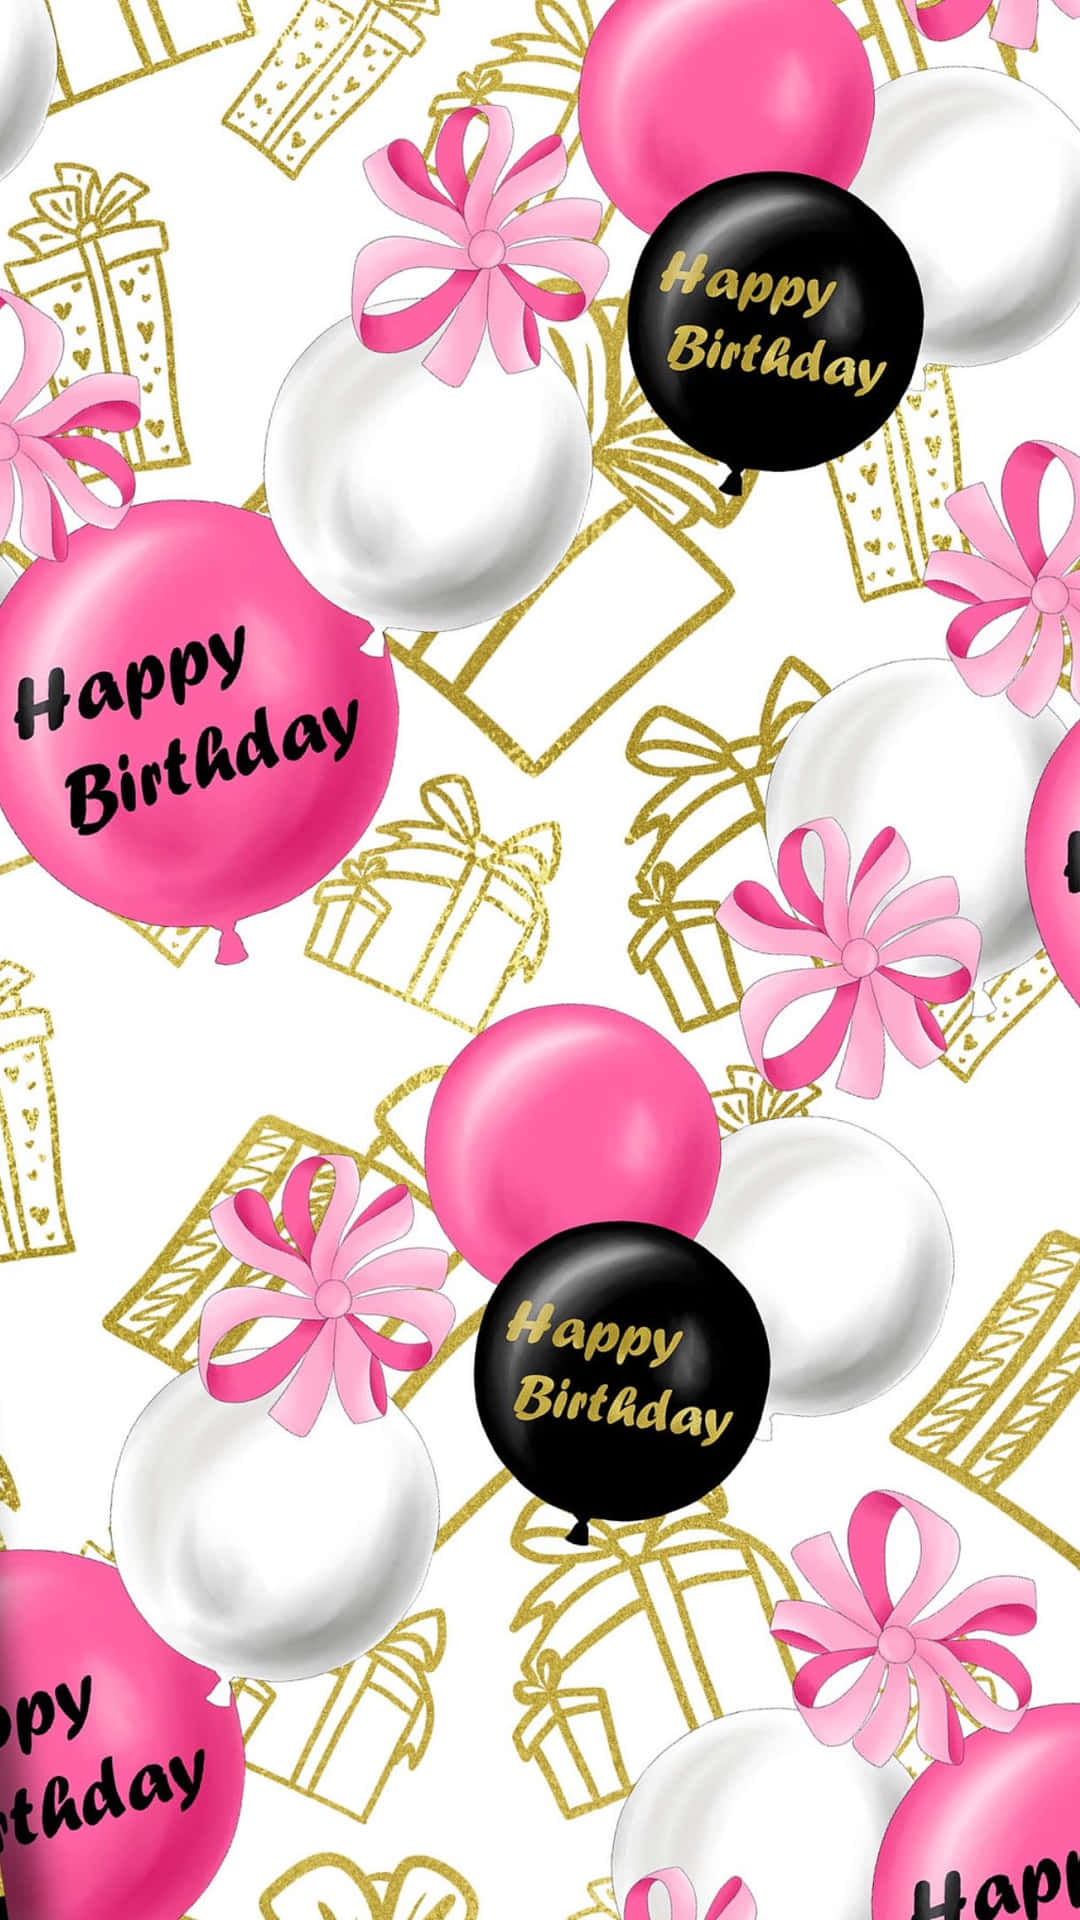 "a Delightful Celebration - Birthday Wishes Background"